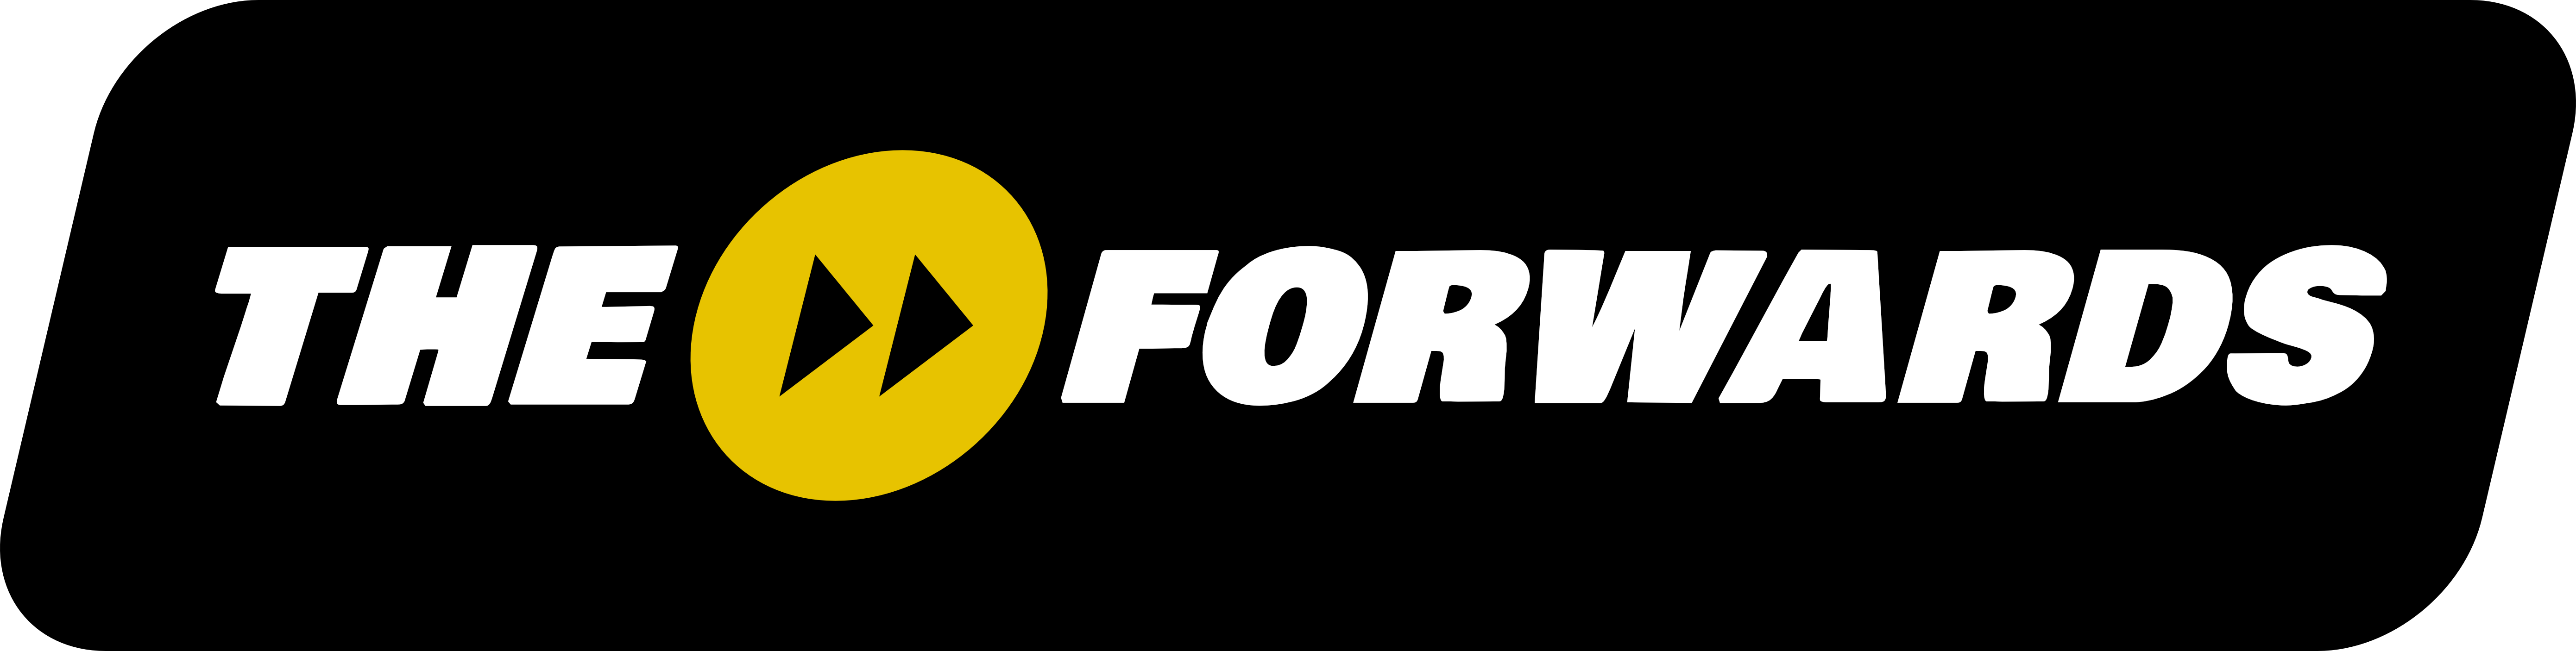 Forwards logo